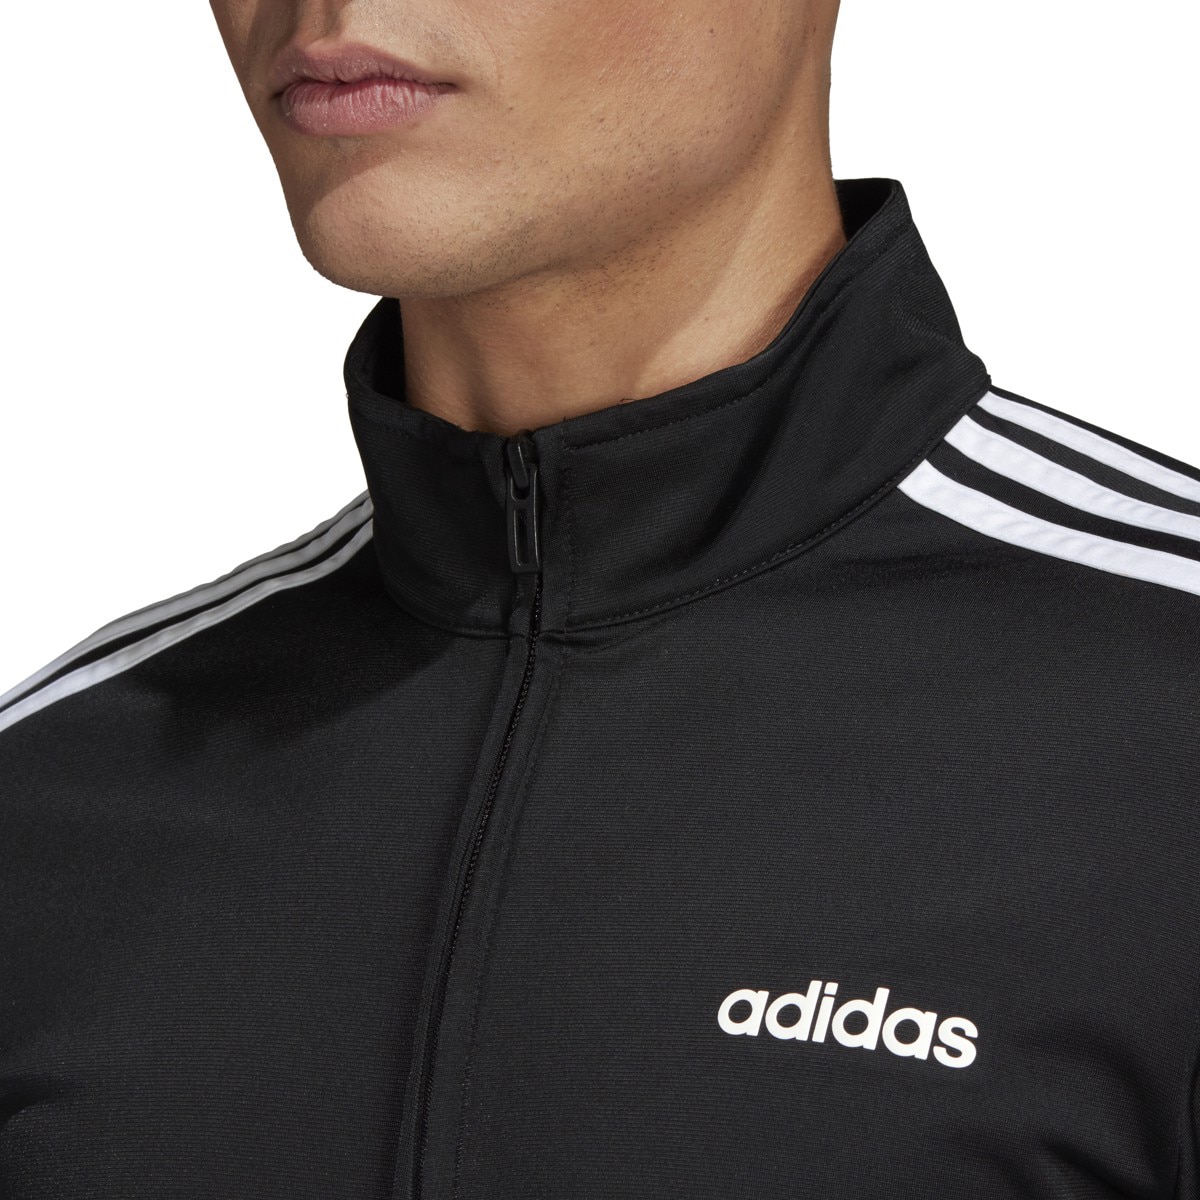 Adidas Essentials 3 Stripe Men's Track Jacket DQ3070 - Black, White - image 4 of 8